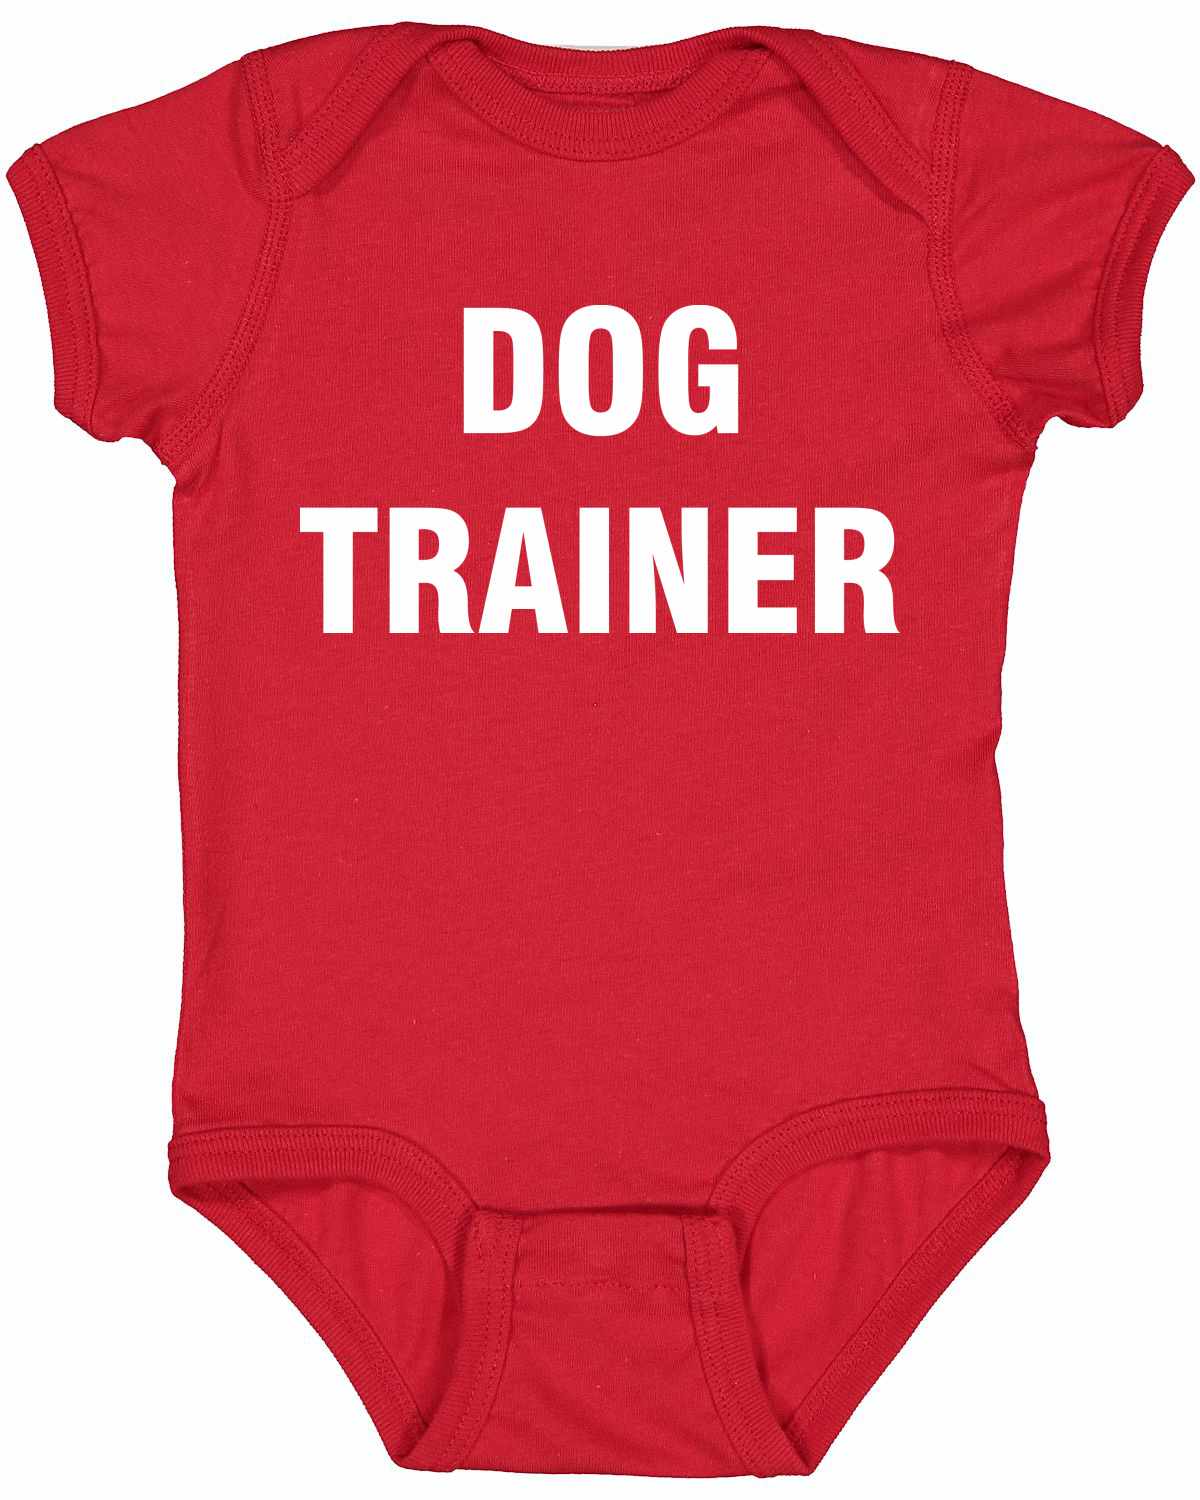 DOG TRAINER on Infant BodySuit (#239-10)